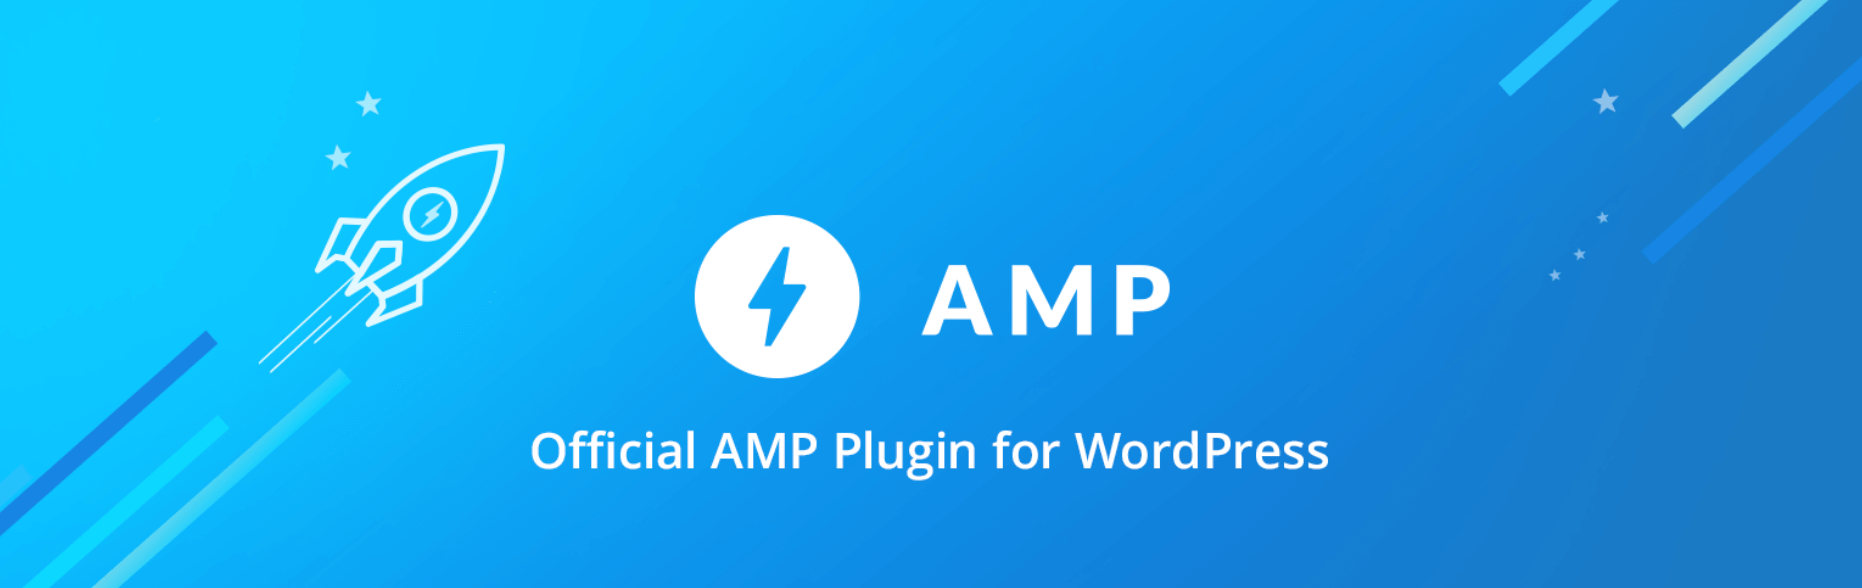 The official AMP WordPress plugin.